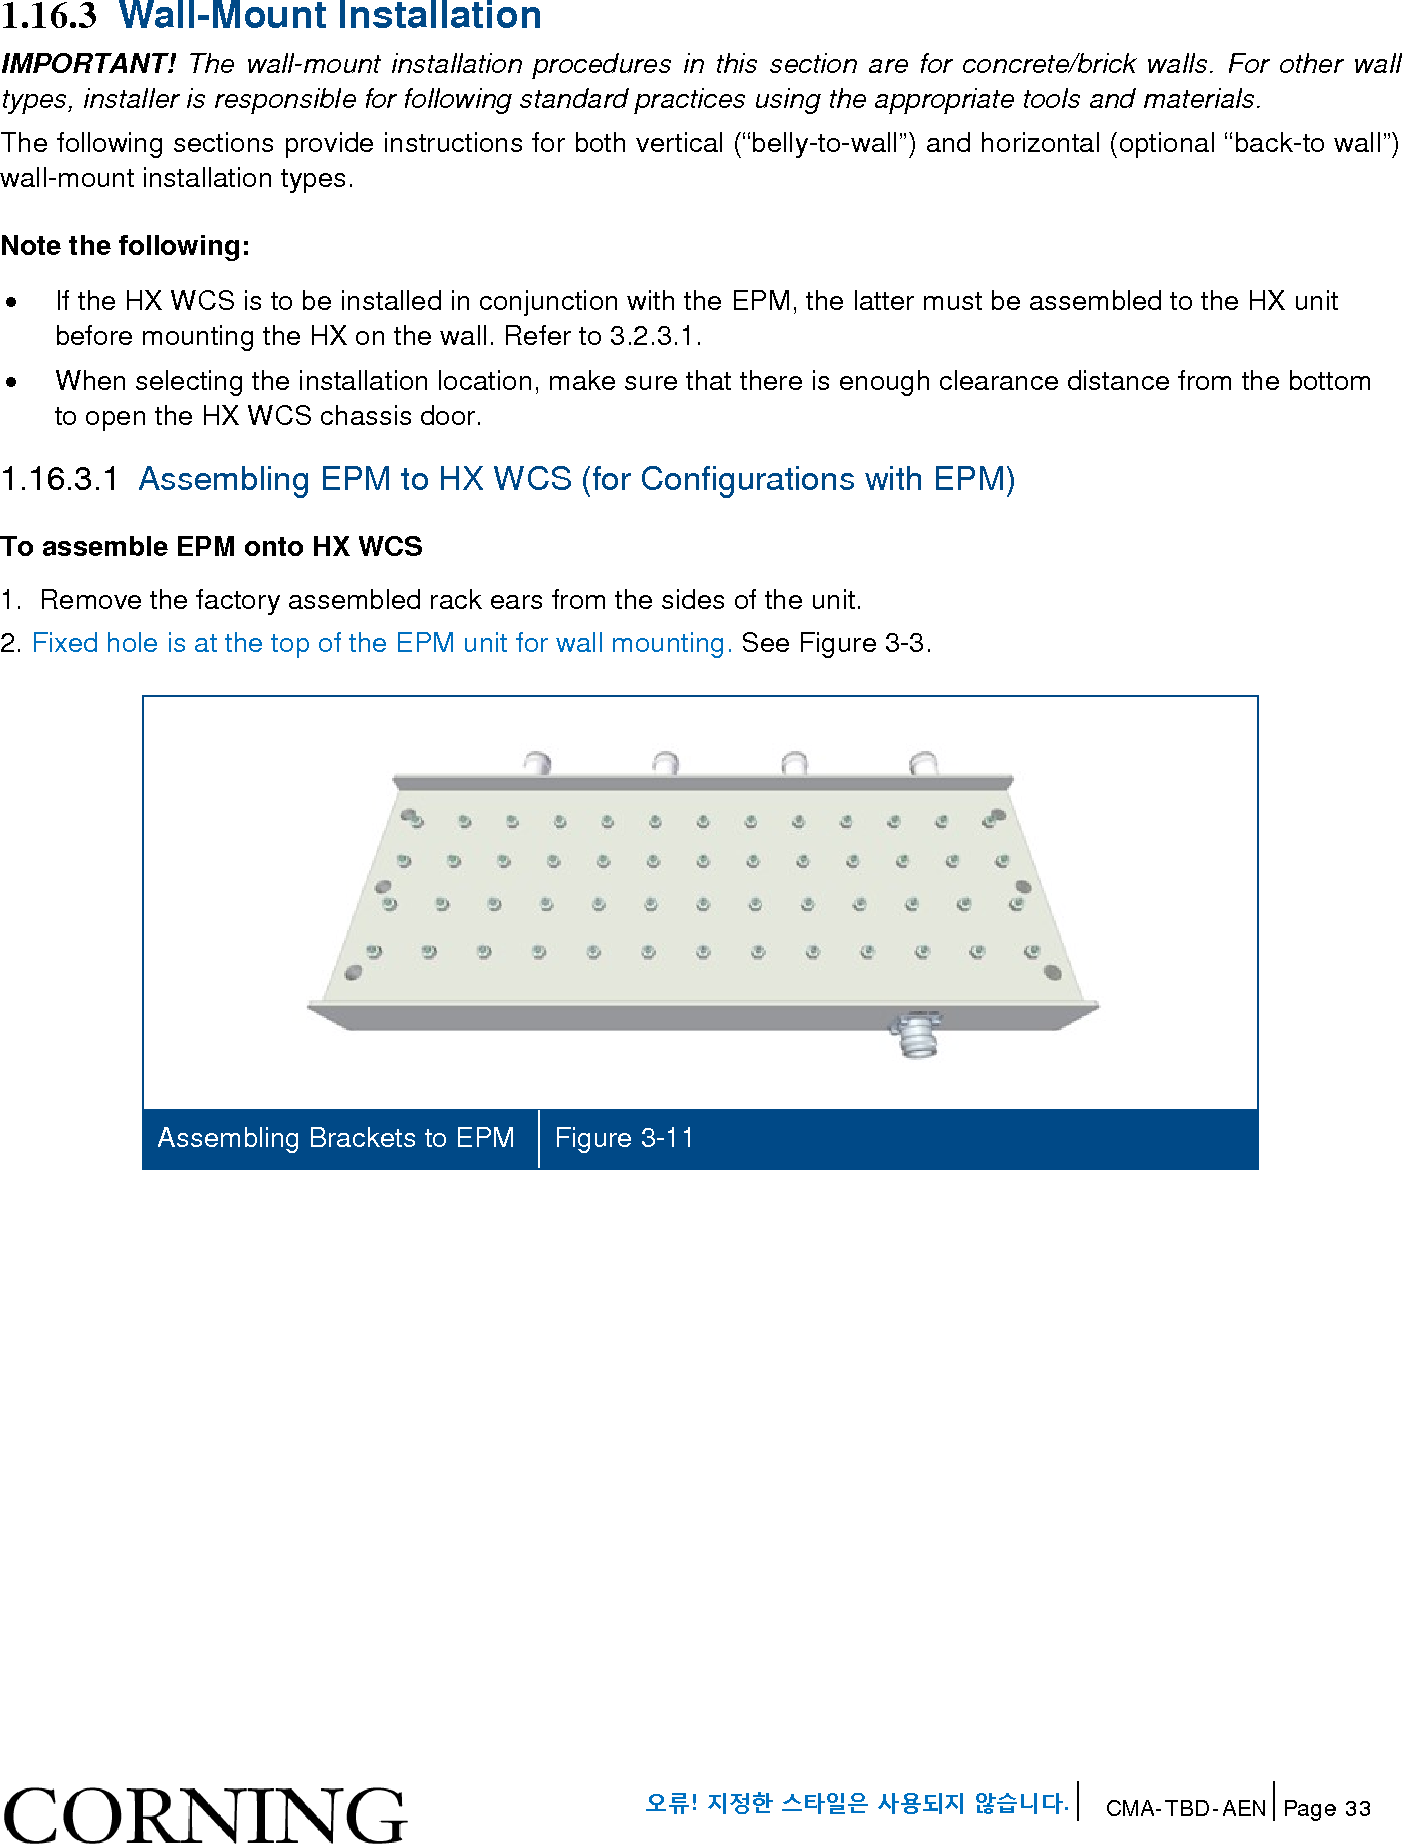 Page 33 of Corning Optical Communication HX-WCS-MIMO Optical RepeaterModel name - HX-WCS-MIMO User Manual HX WCS